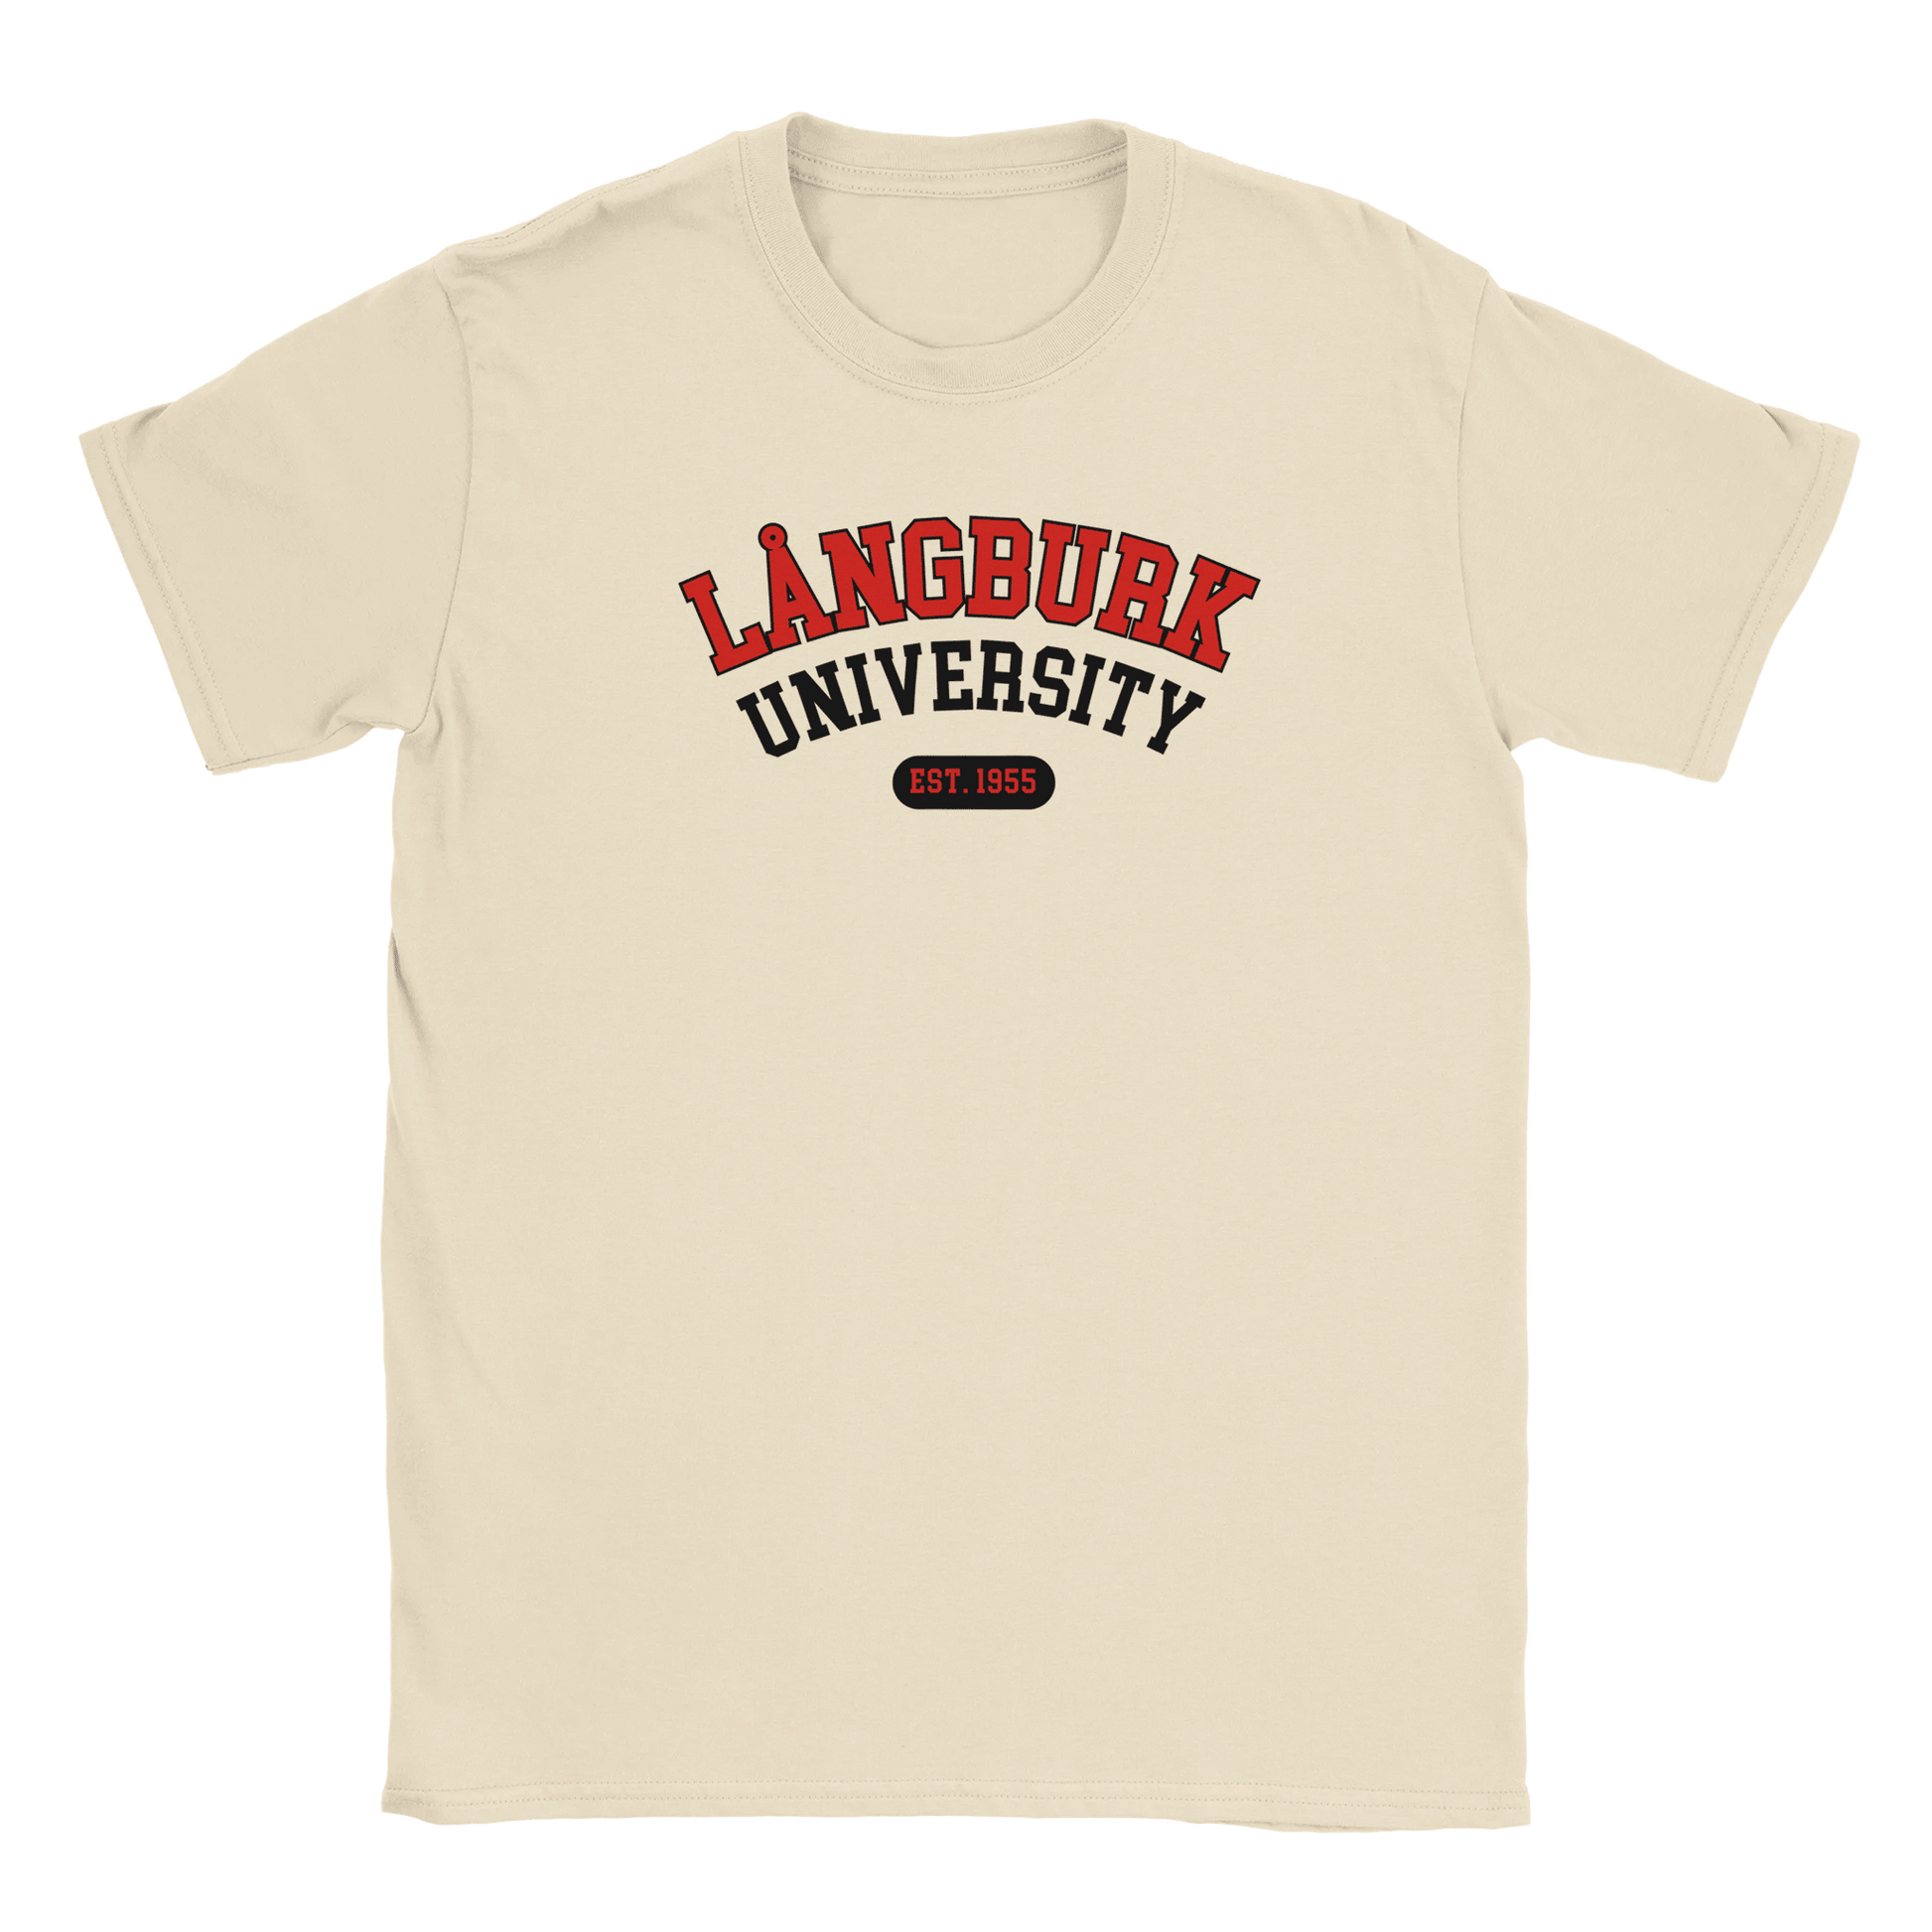 Långburk University Est. 1955 - T-shirt Beige